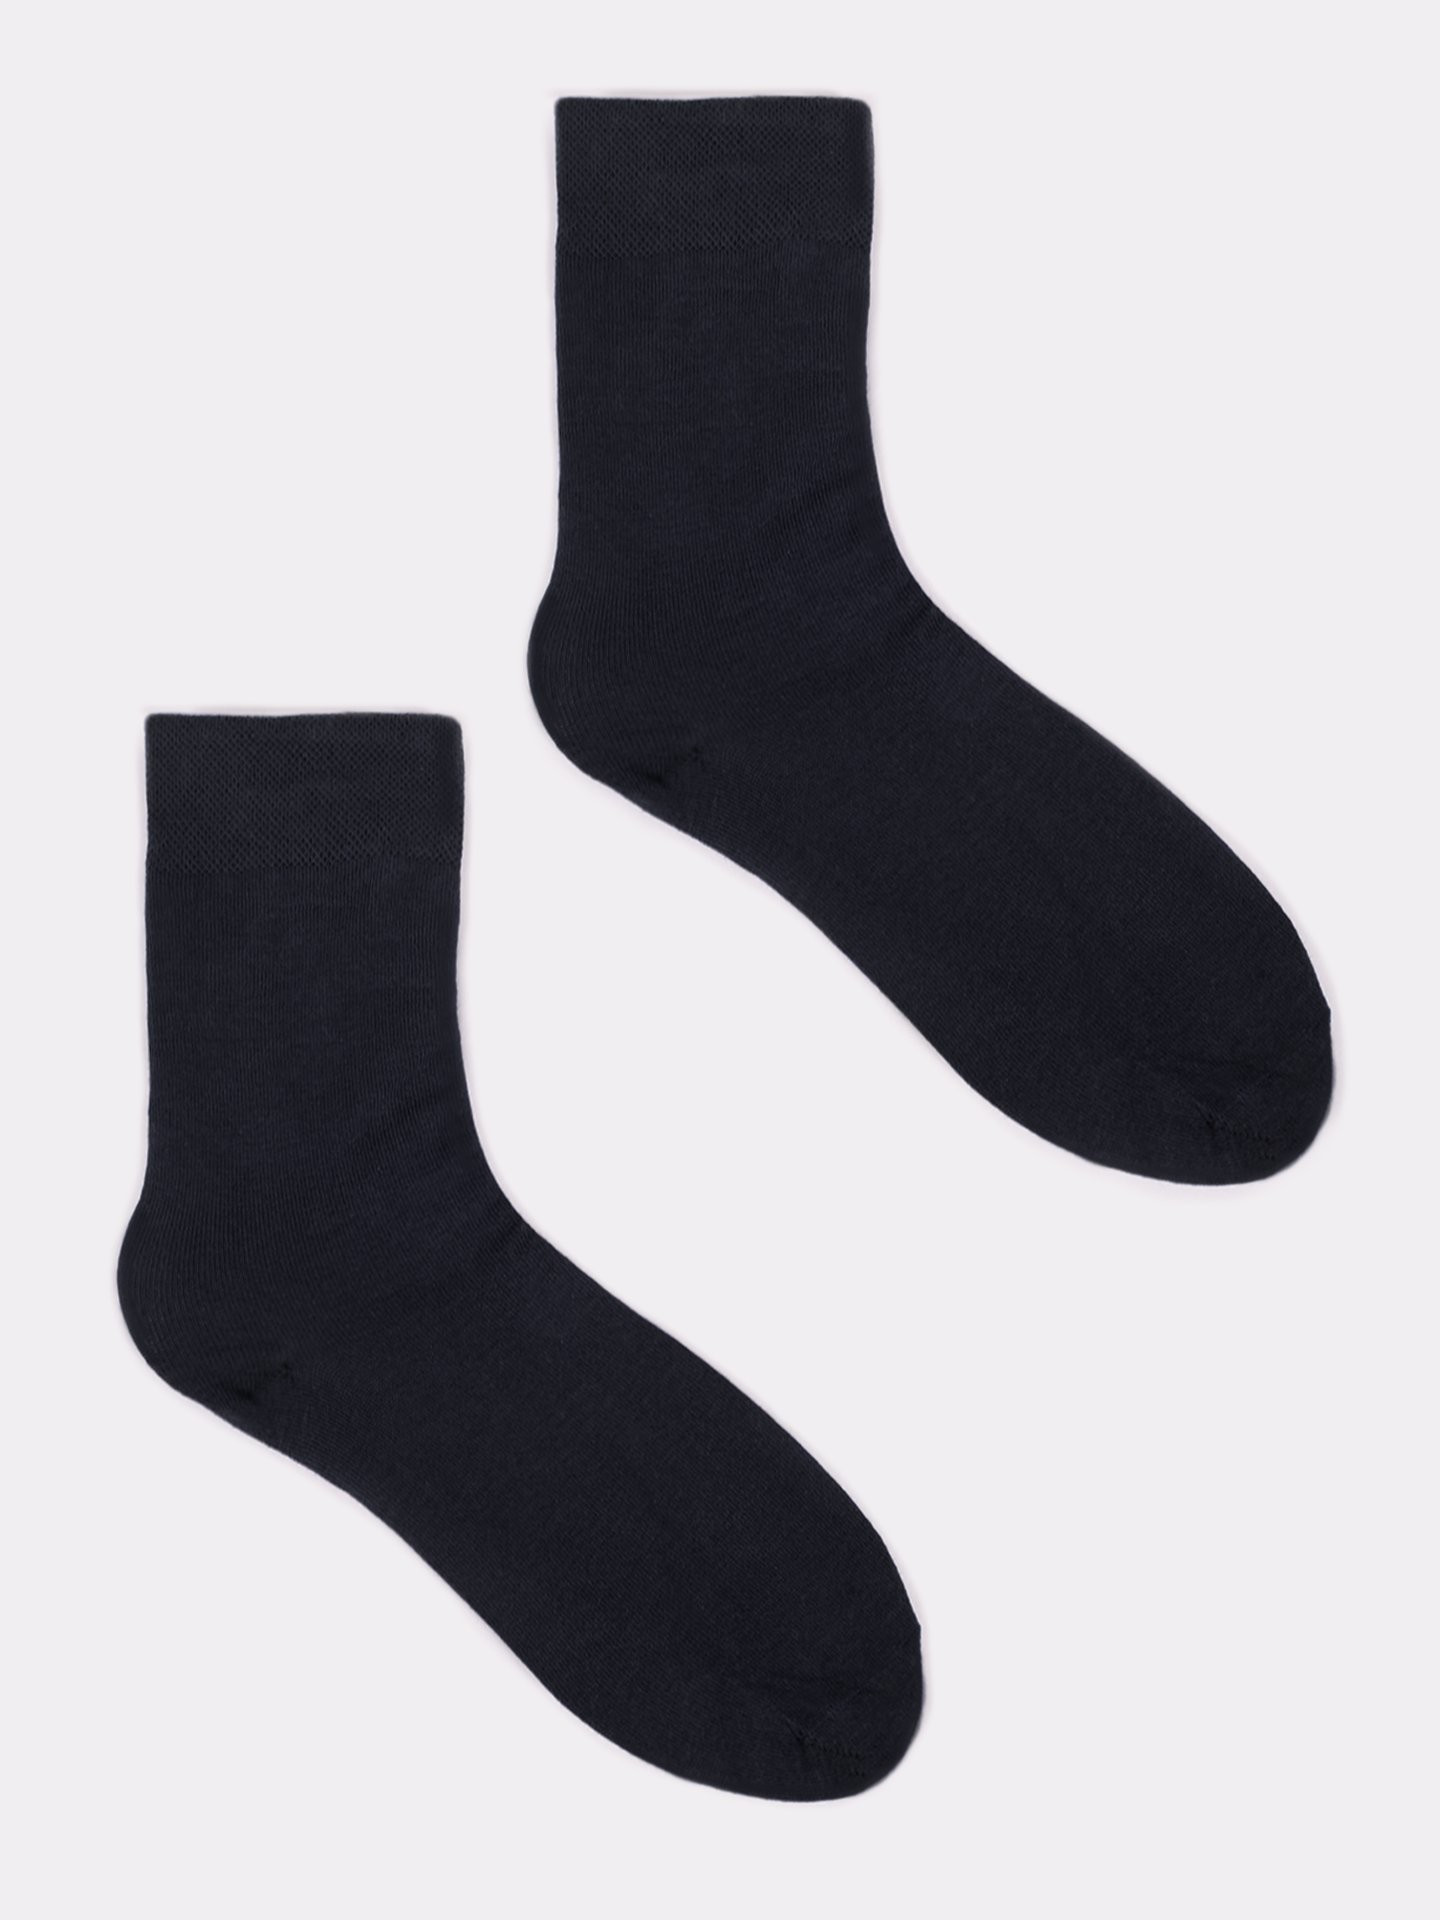 Pánské hladké černé ponožky Black 3942 model 17947707 - Yoclub